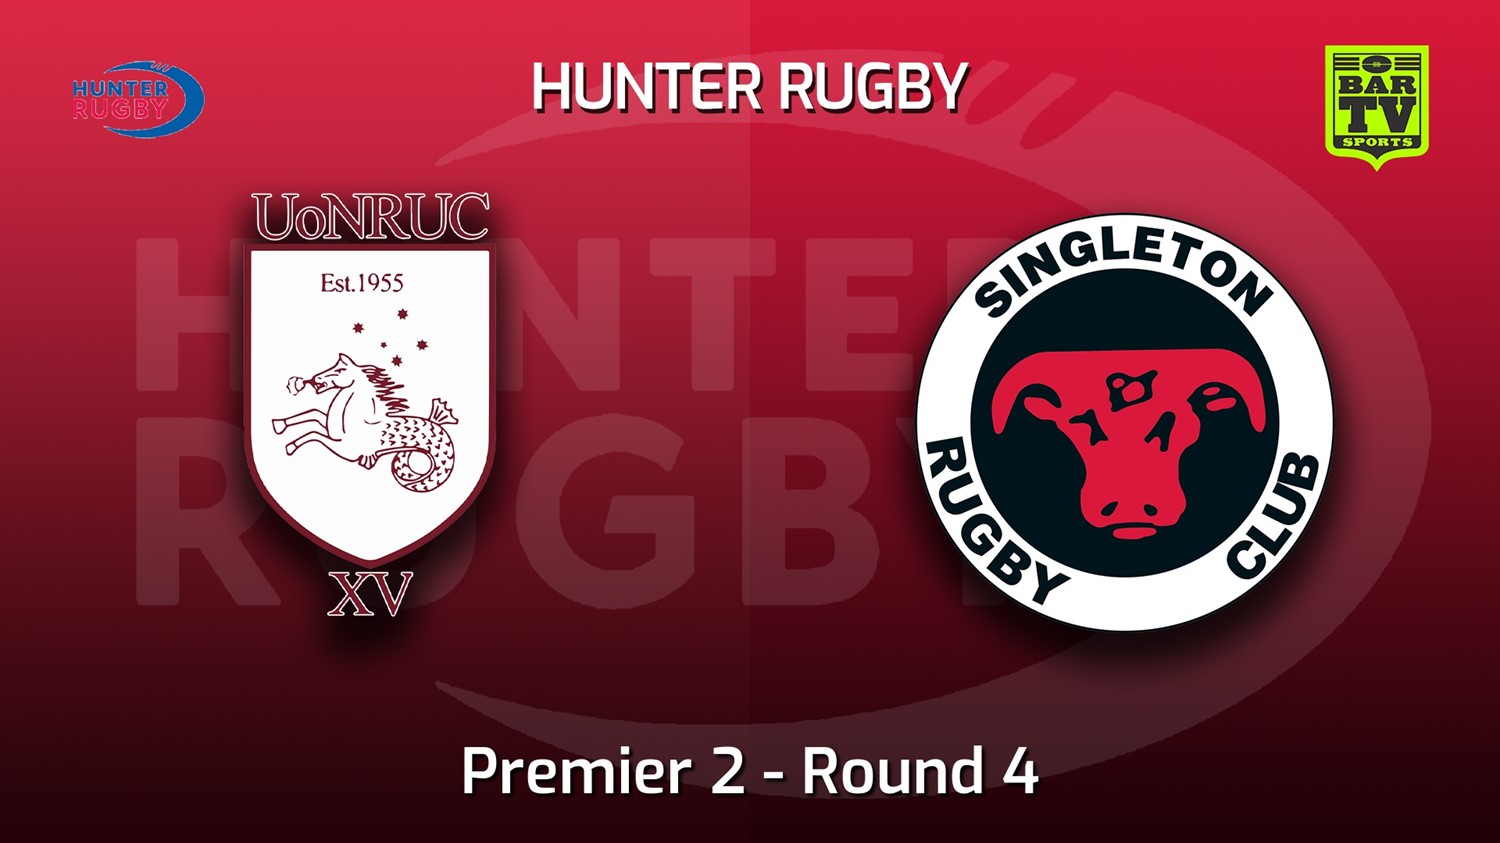 220514-Hunter Rugby Round 4 - Premier 2 - University Of Newcastle v Singleton Bulls Slate Image